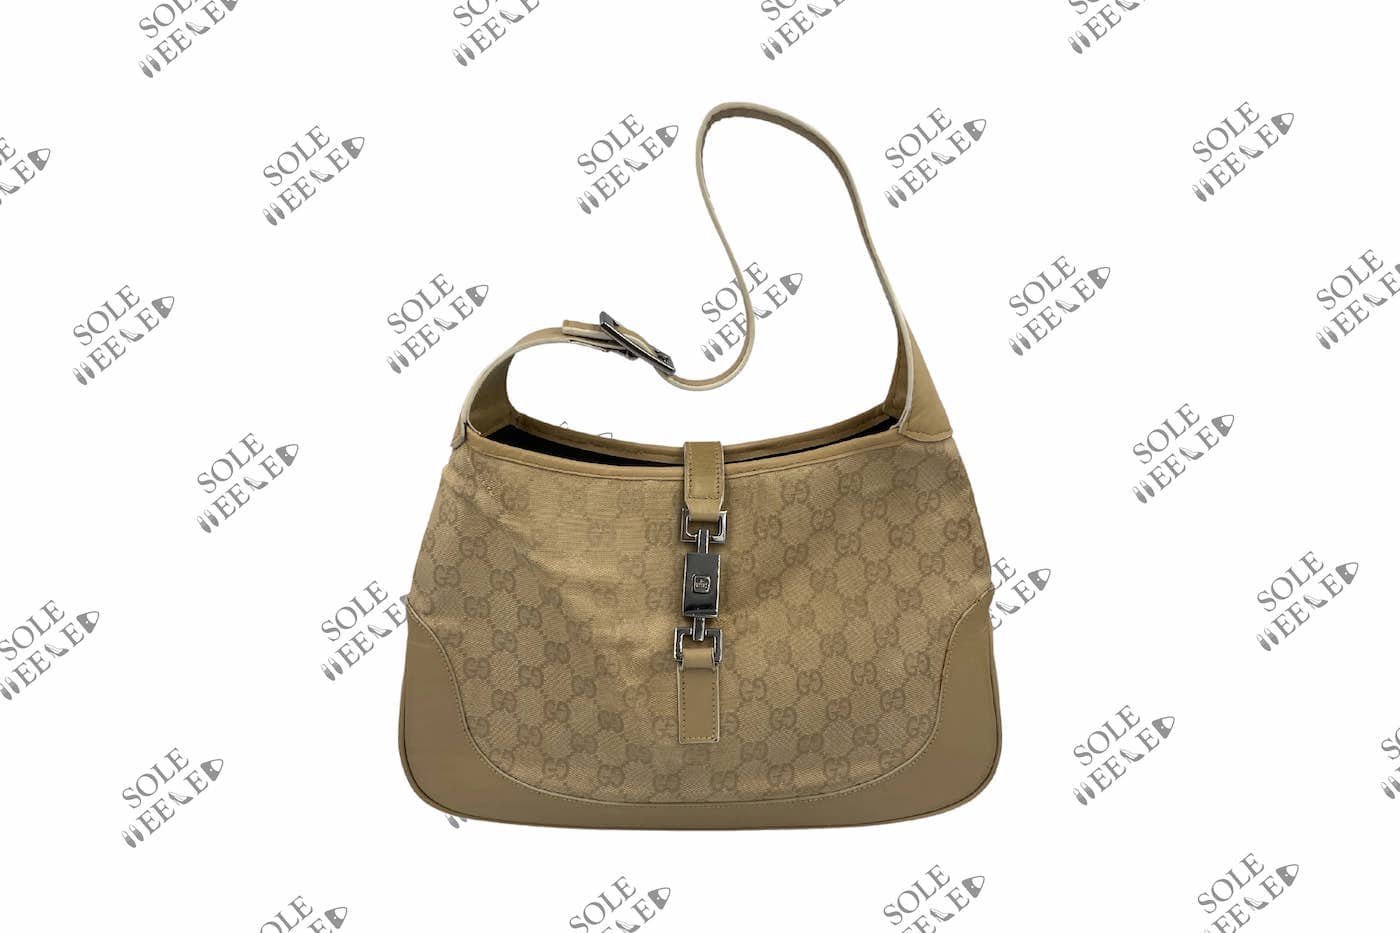 Gucci Handbag Strap & Top Binding Replacement